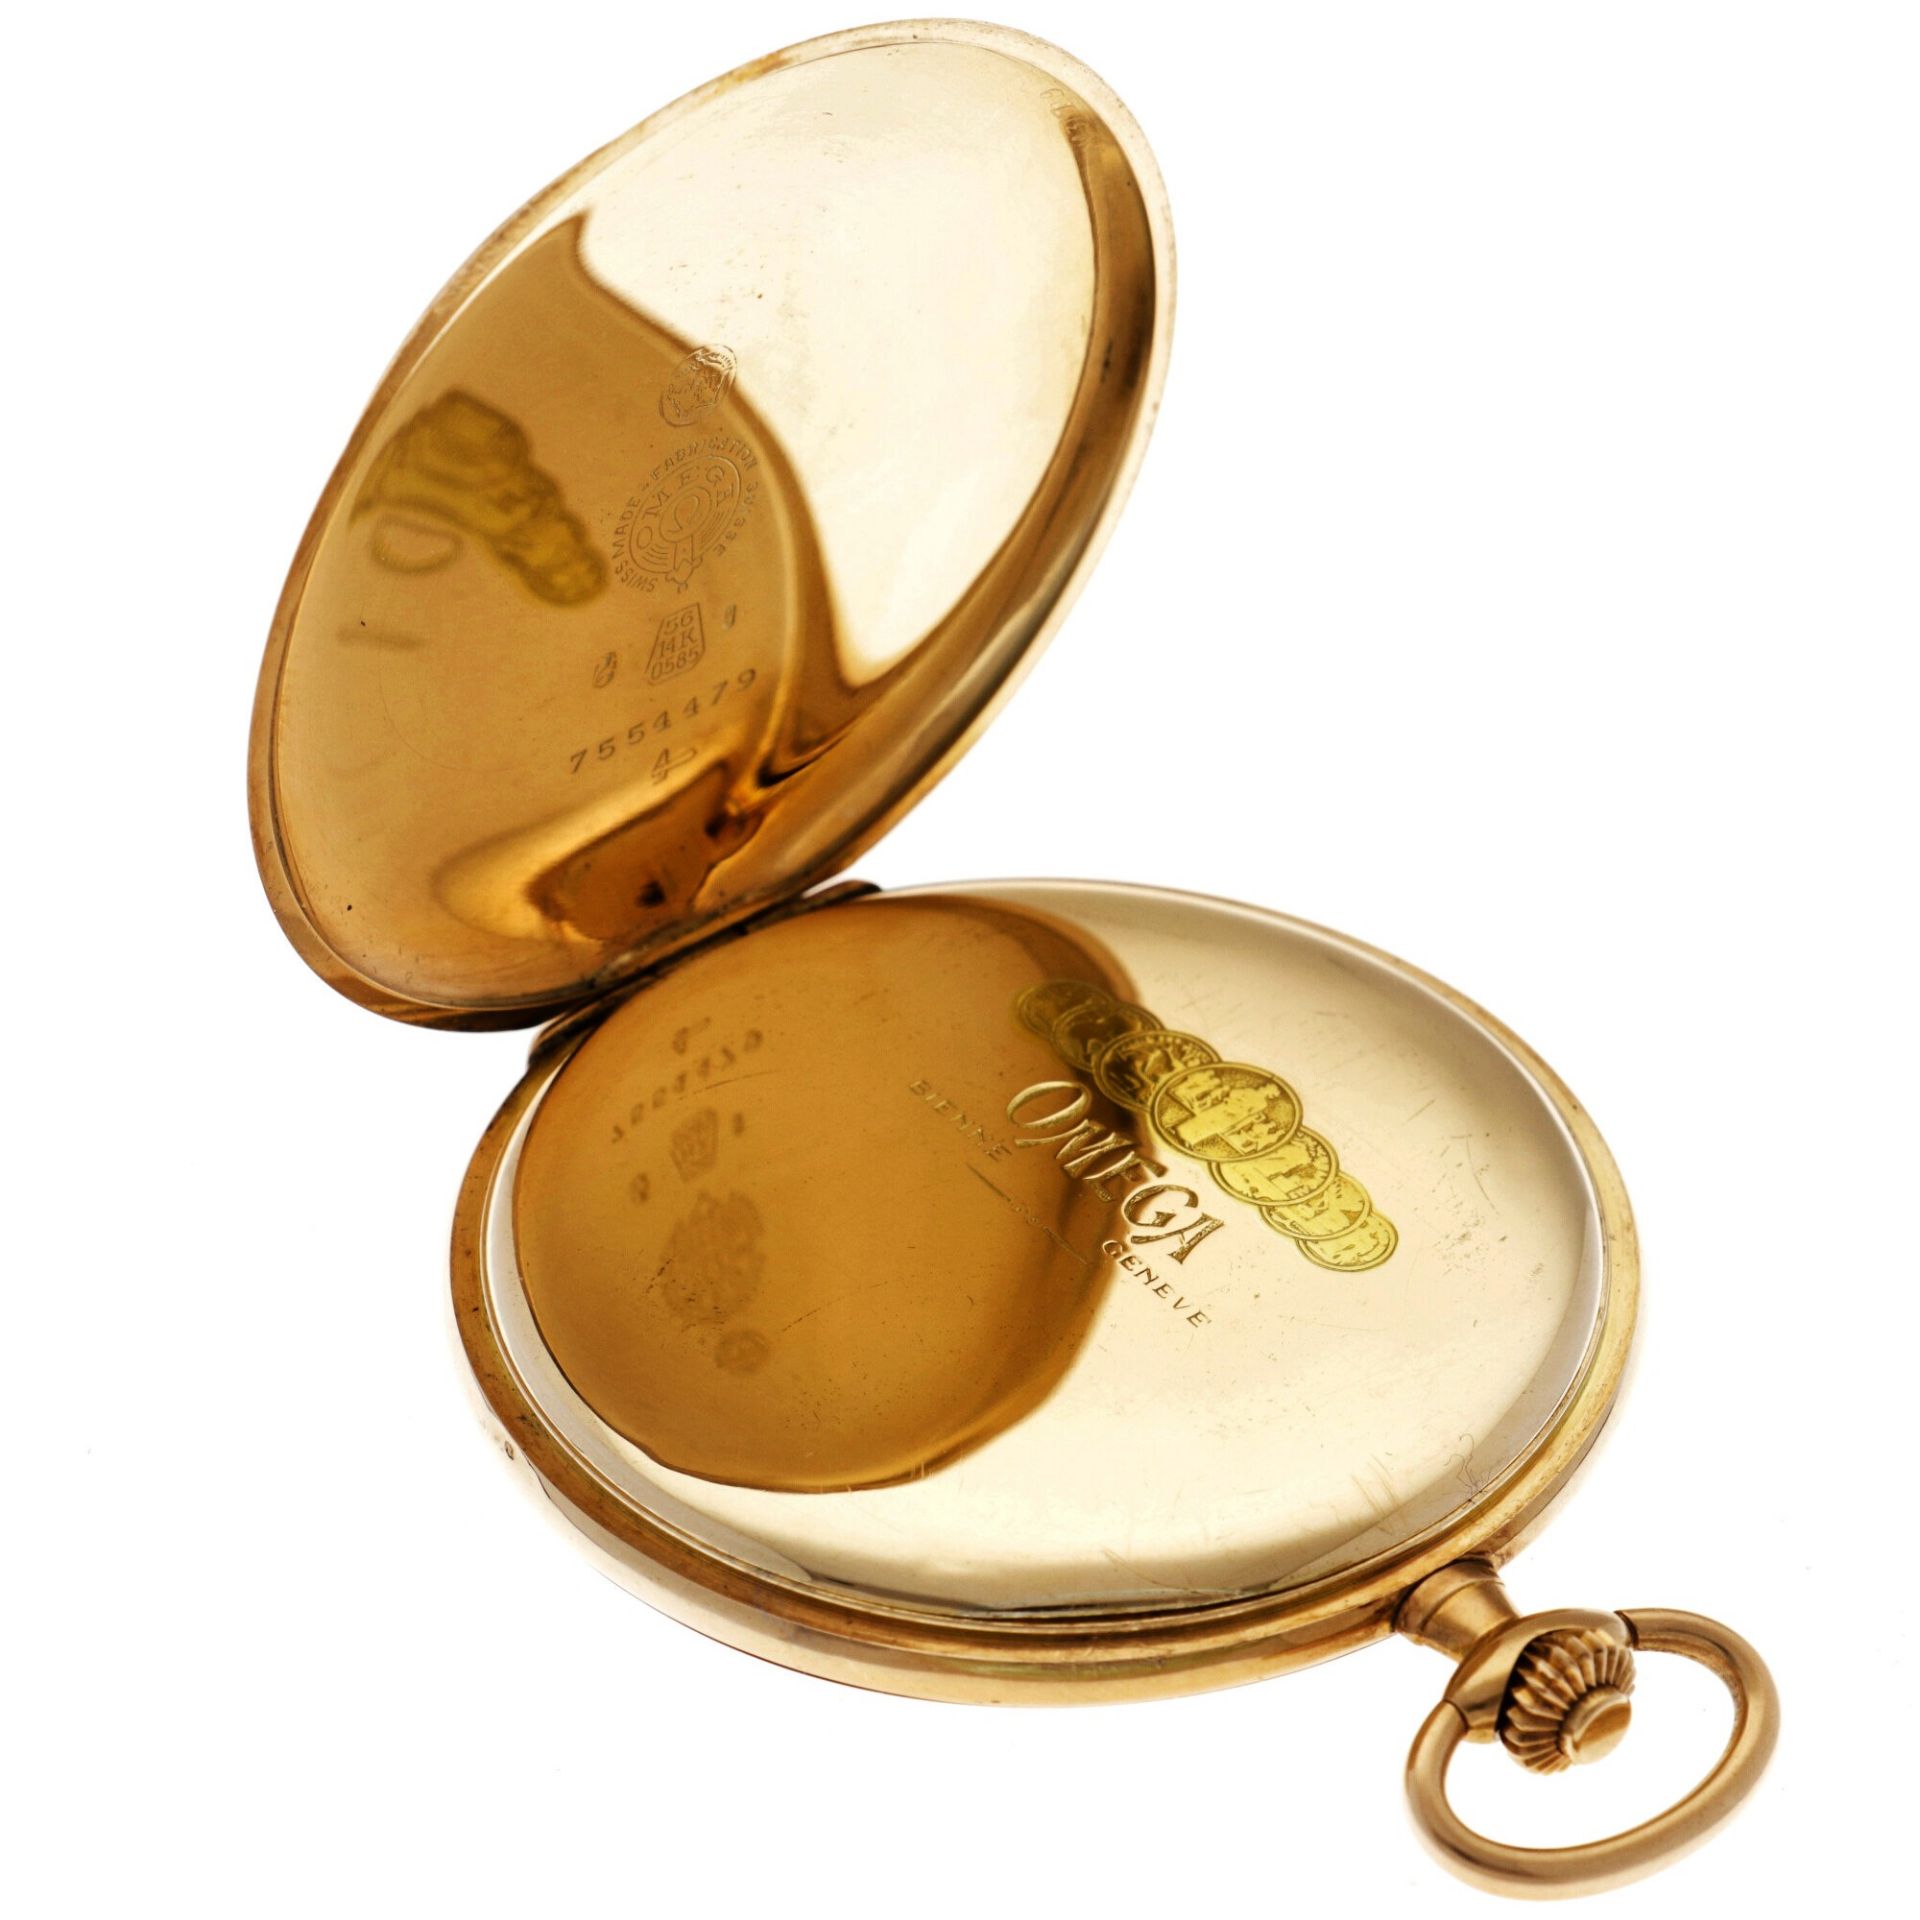 Omega - Men's pocket watch 14K. yellow gold - 1916. - Image 5 of 6